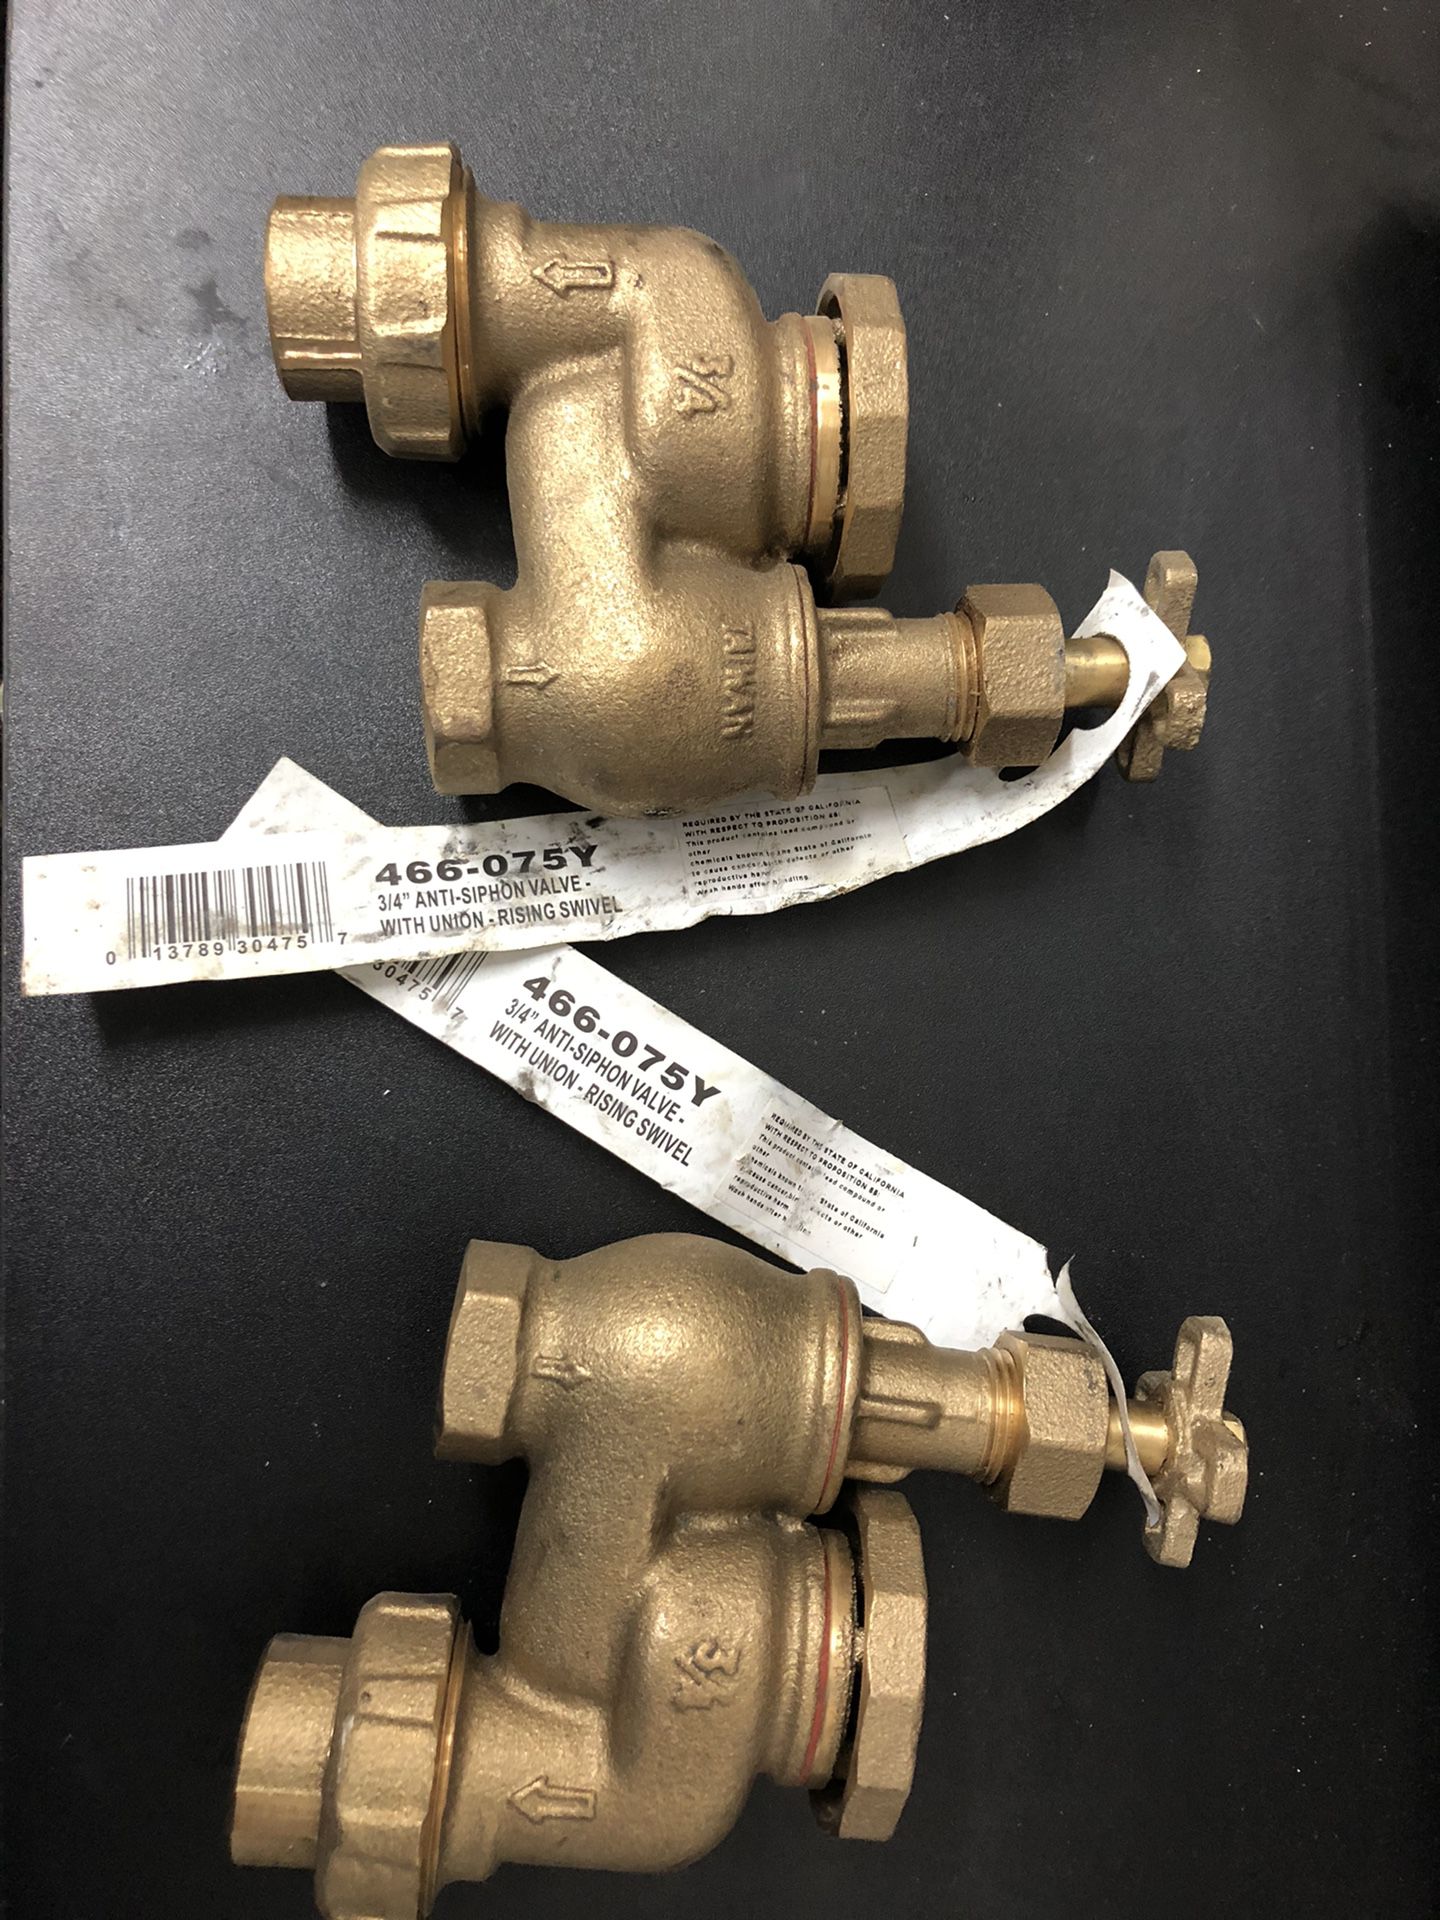 Sprinkler 3/4” valves